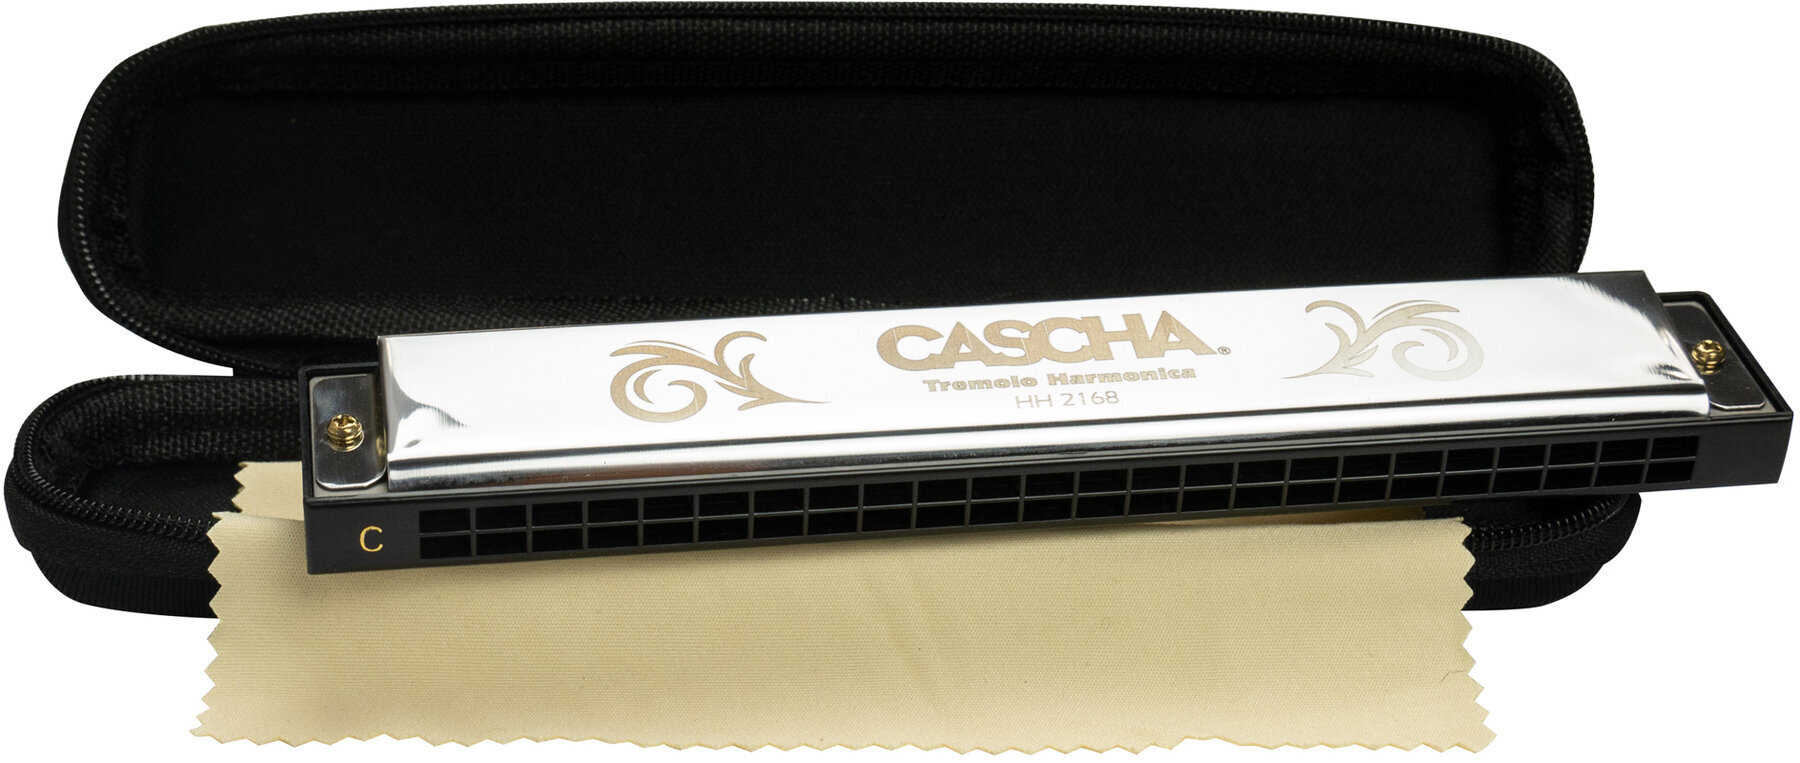 Diatonic harmonica Cascha HH 2168 Tremolo C